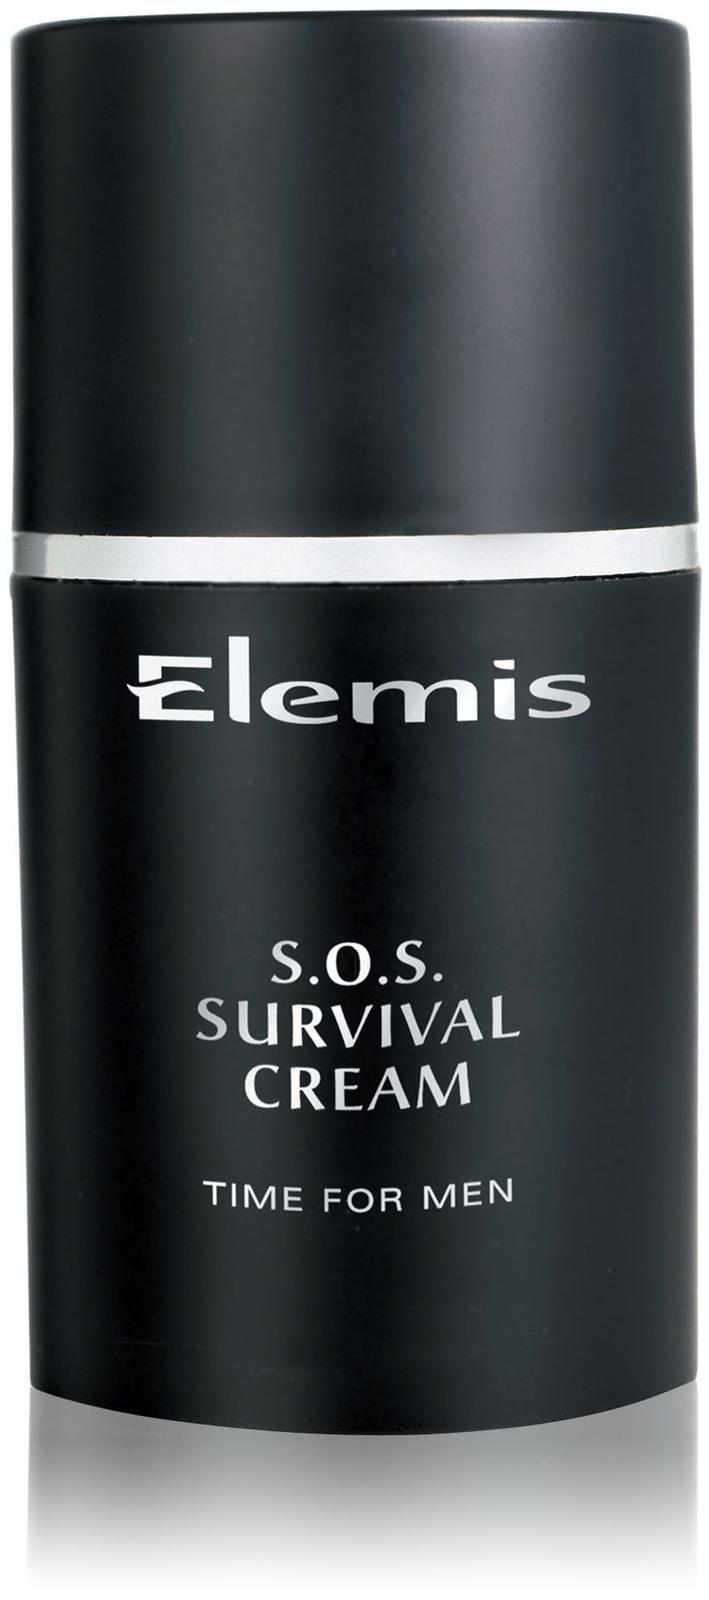 Elemis Time For Men S.o.s. Survival Cream